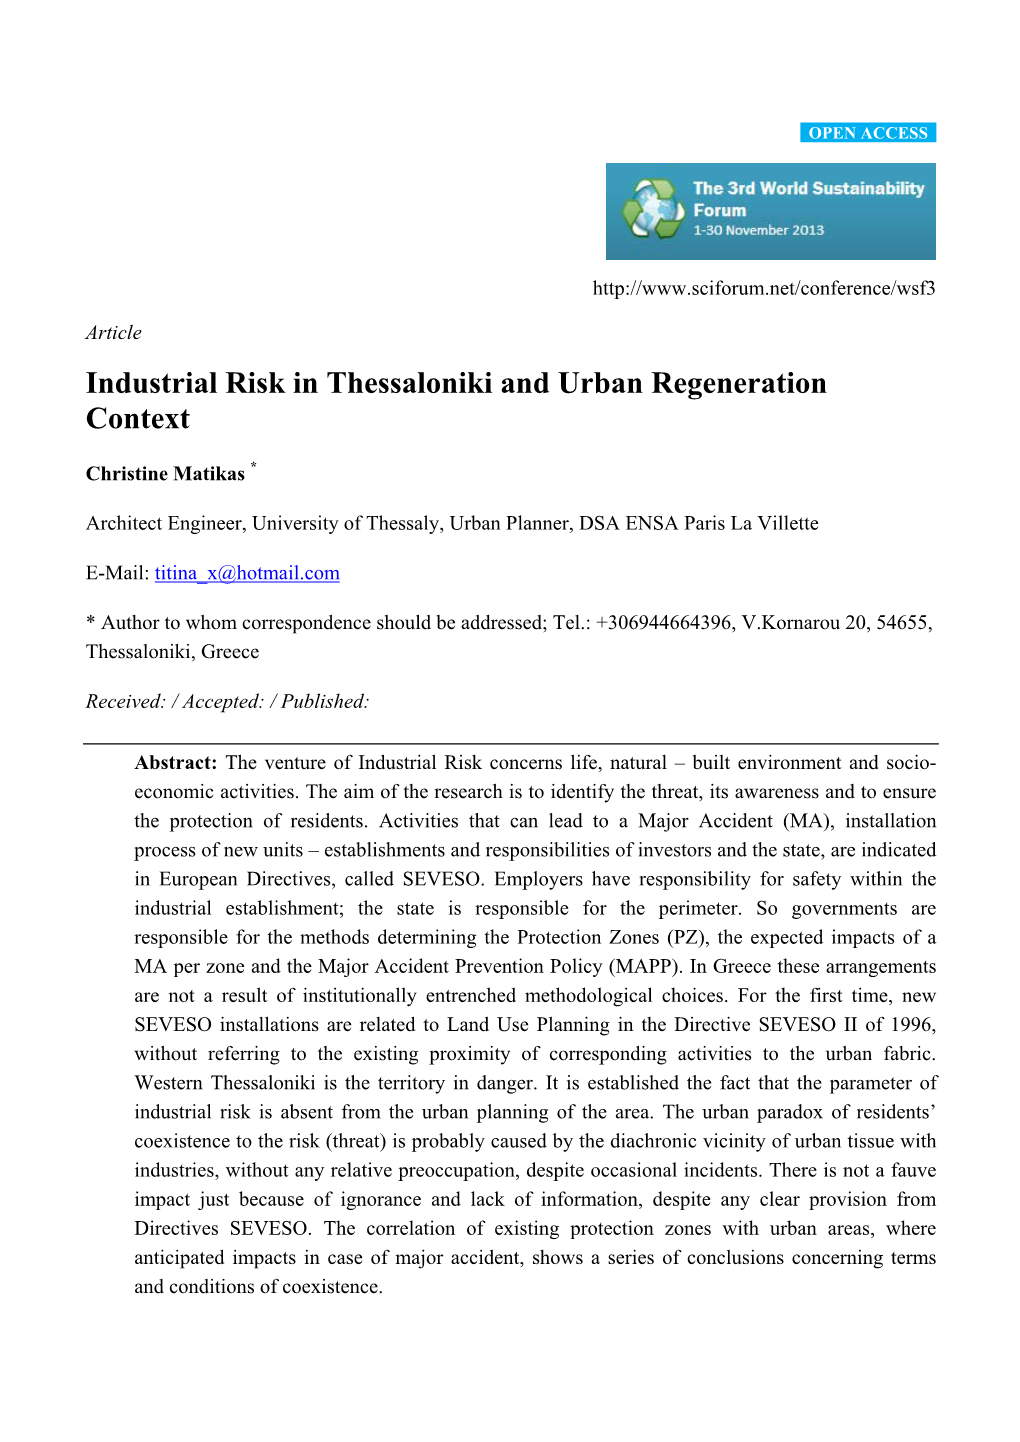 Industrial Risk in Thessaloniki and Urban Regeneration Context